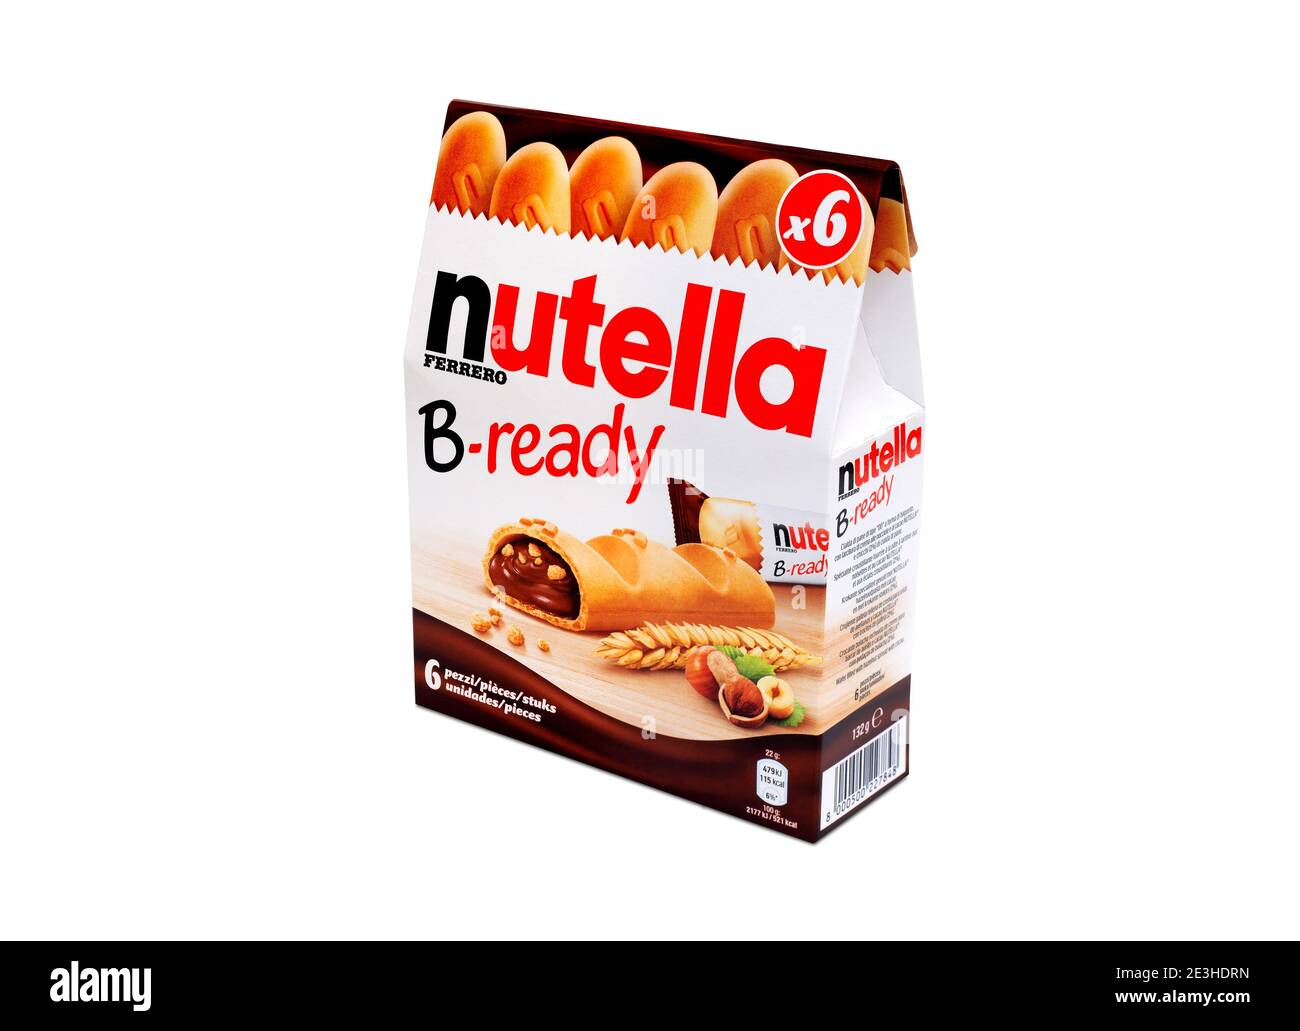 Italy - December 24. 2020: Nutella B ready snack pack of Ferrero brand on  white background Stock Photo - Alamy